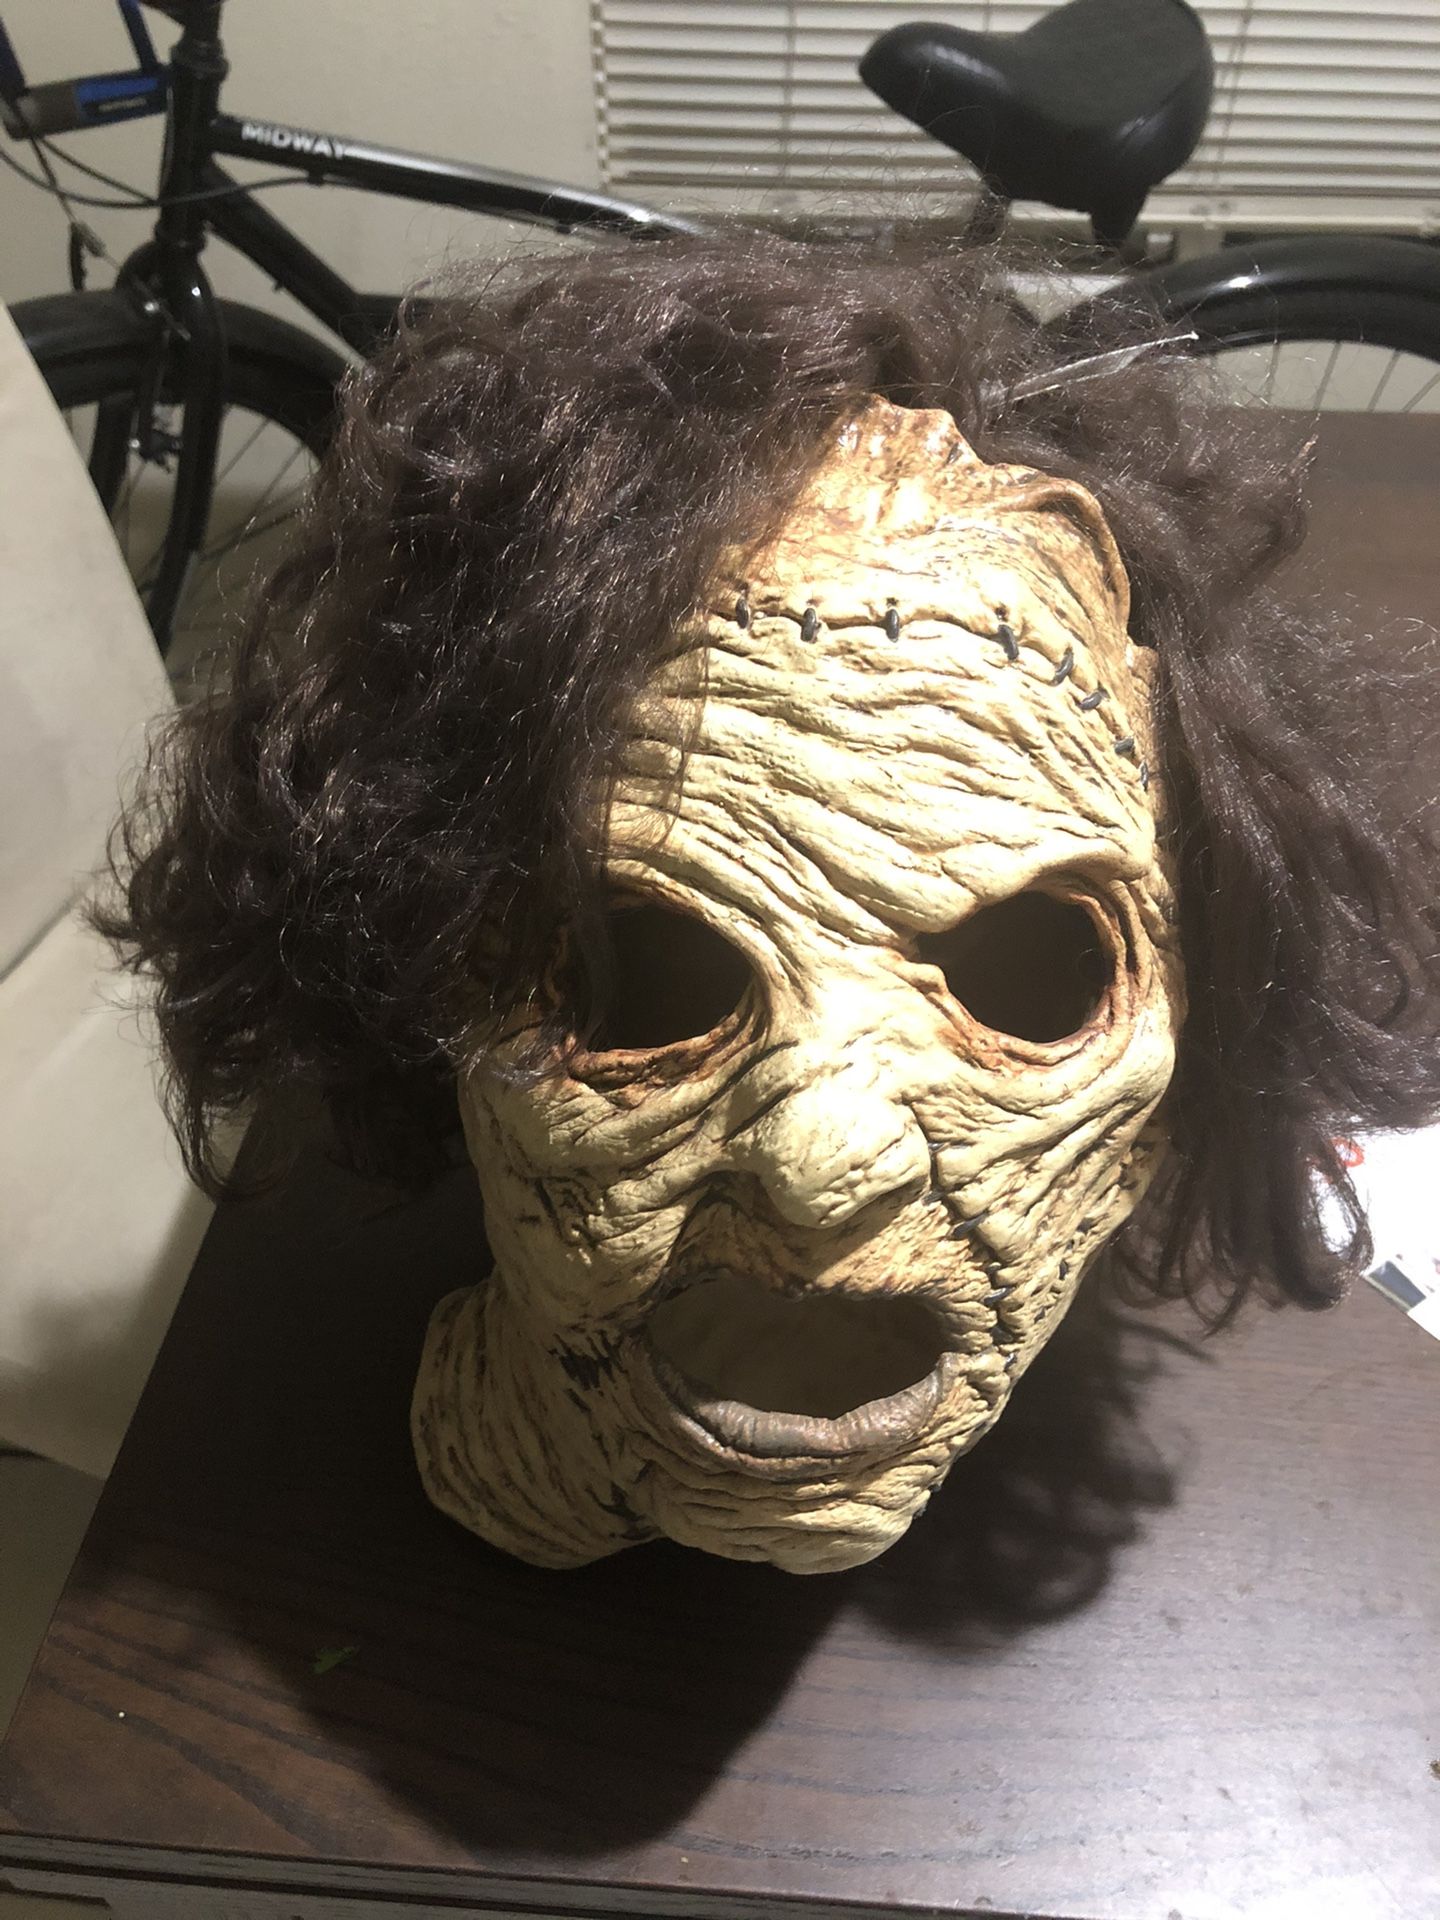 Brand new mask